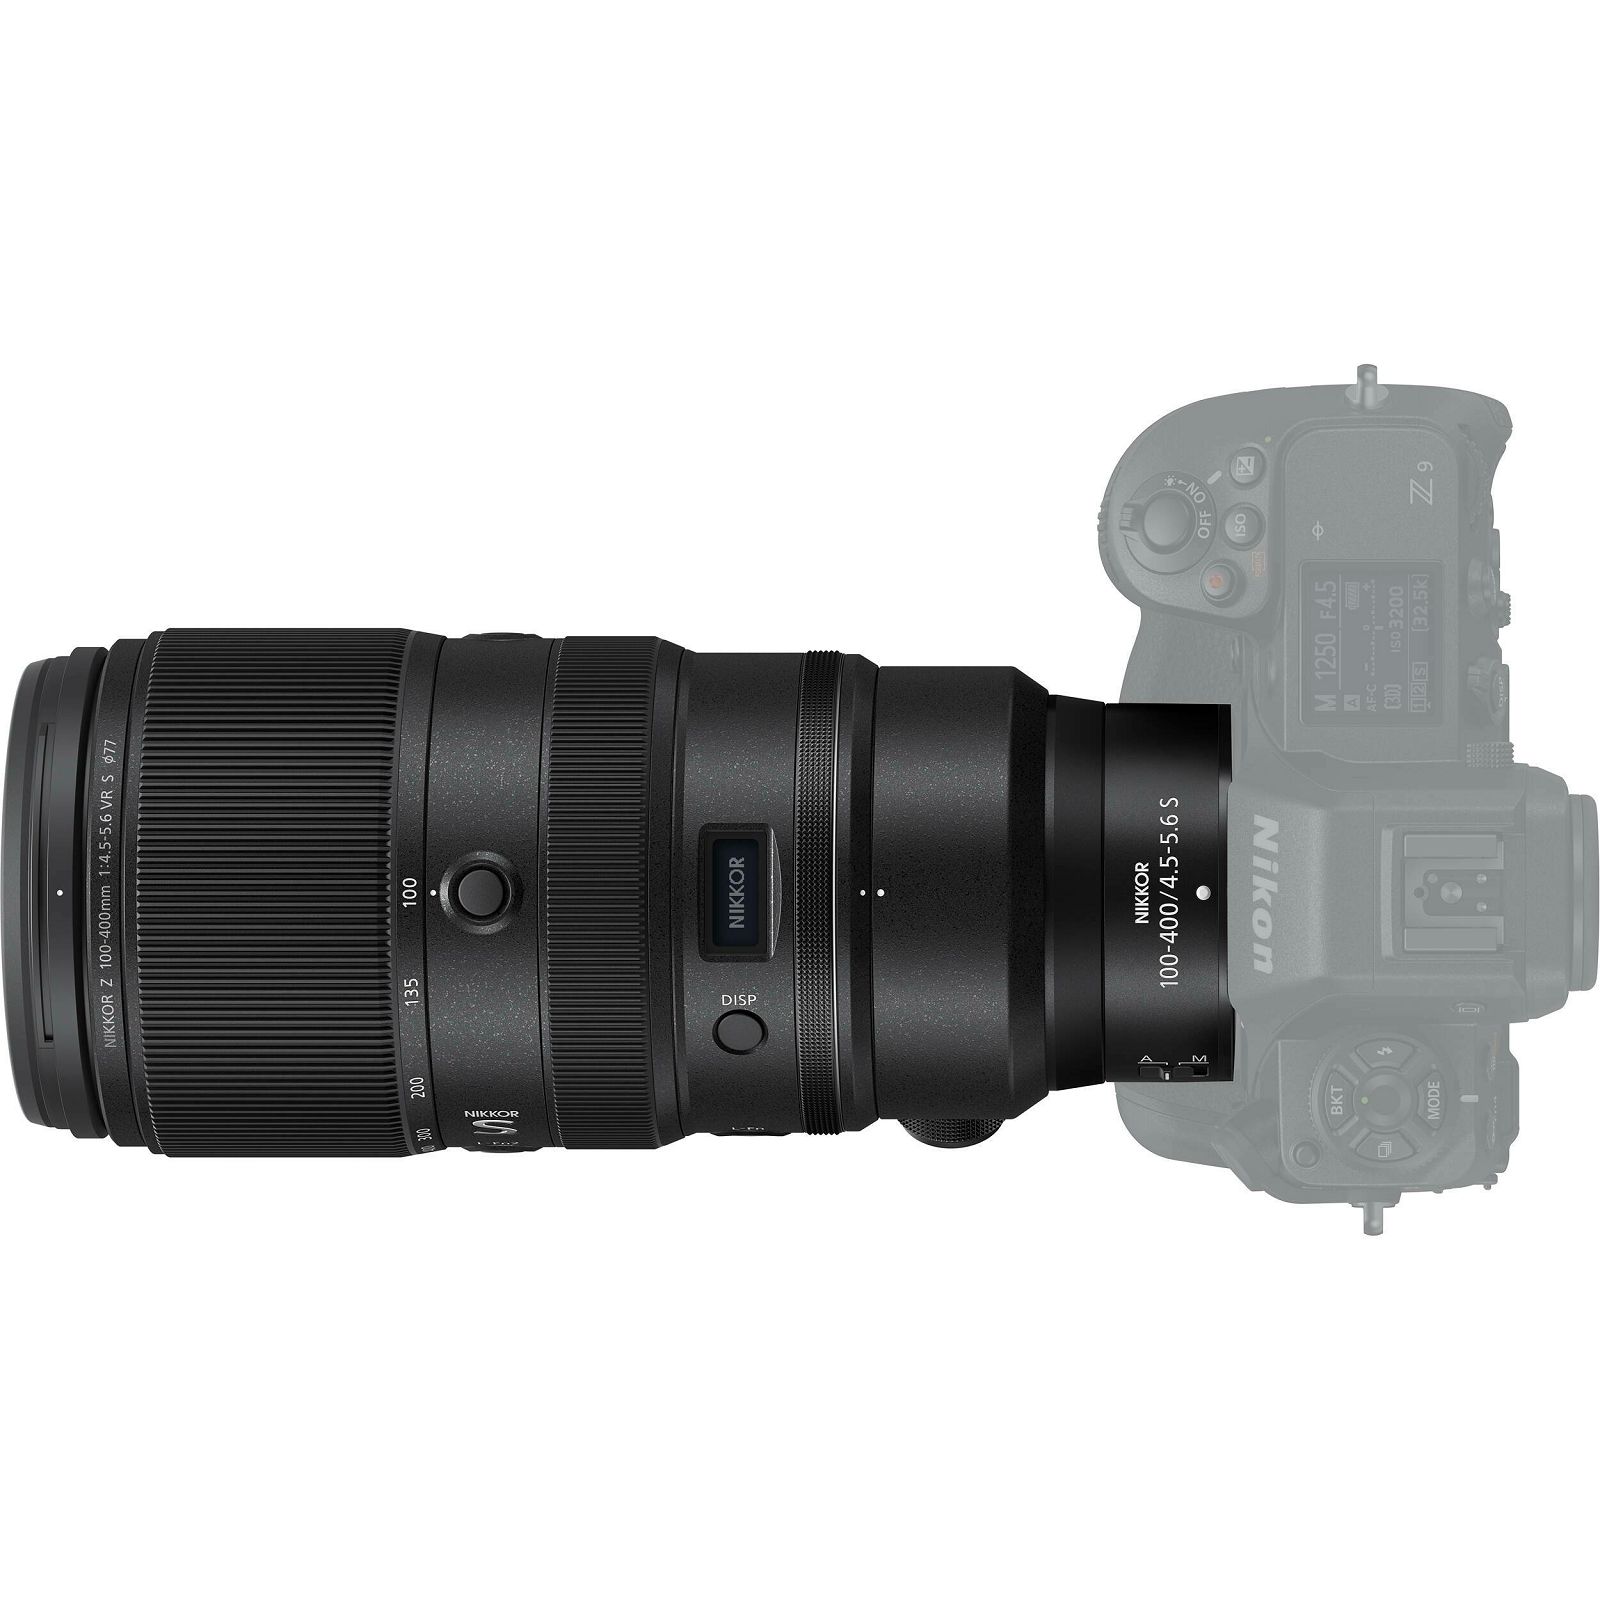 Nikon Z 100-400mm f/4.5-5.6 VR S telefoto objektiv (JMA716DA)